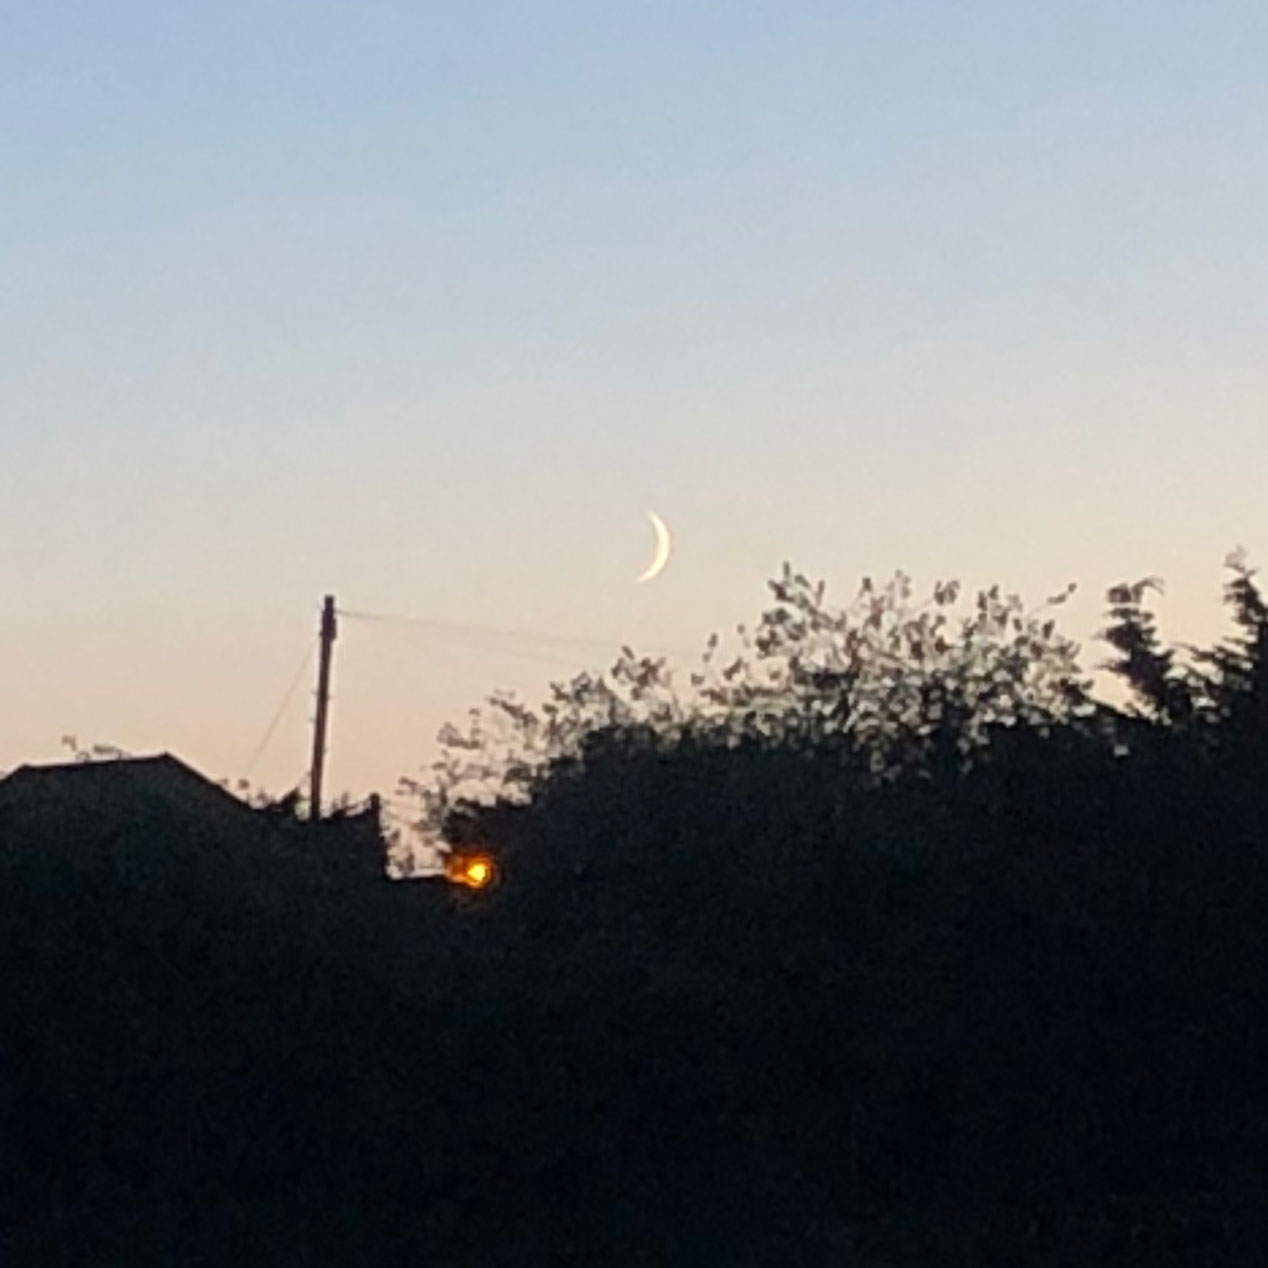 Fingernail Moon over East Anglia by Ben